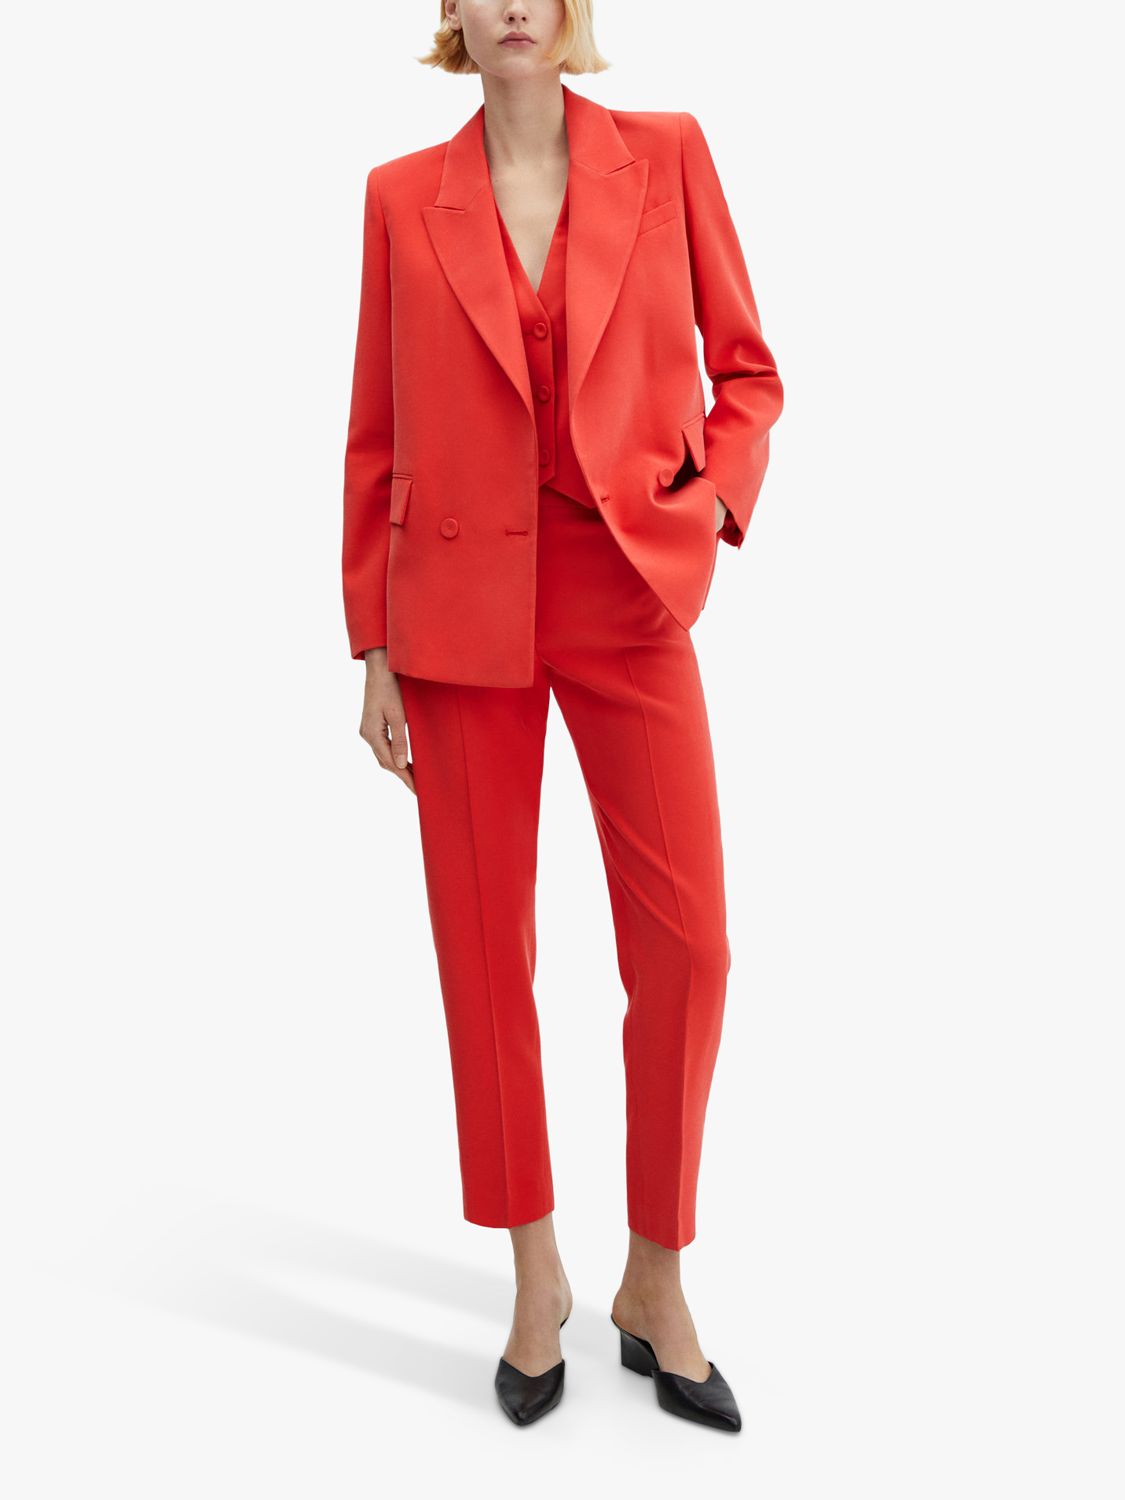 Mango Tempo Double Breasted Suit Blazer, Bright Red, XXS